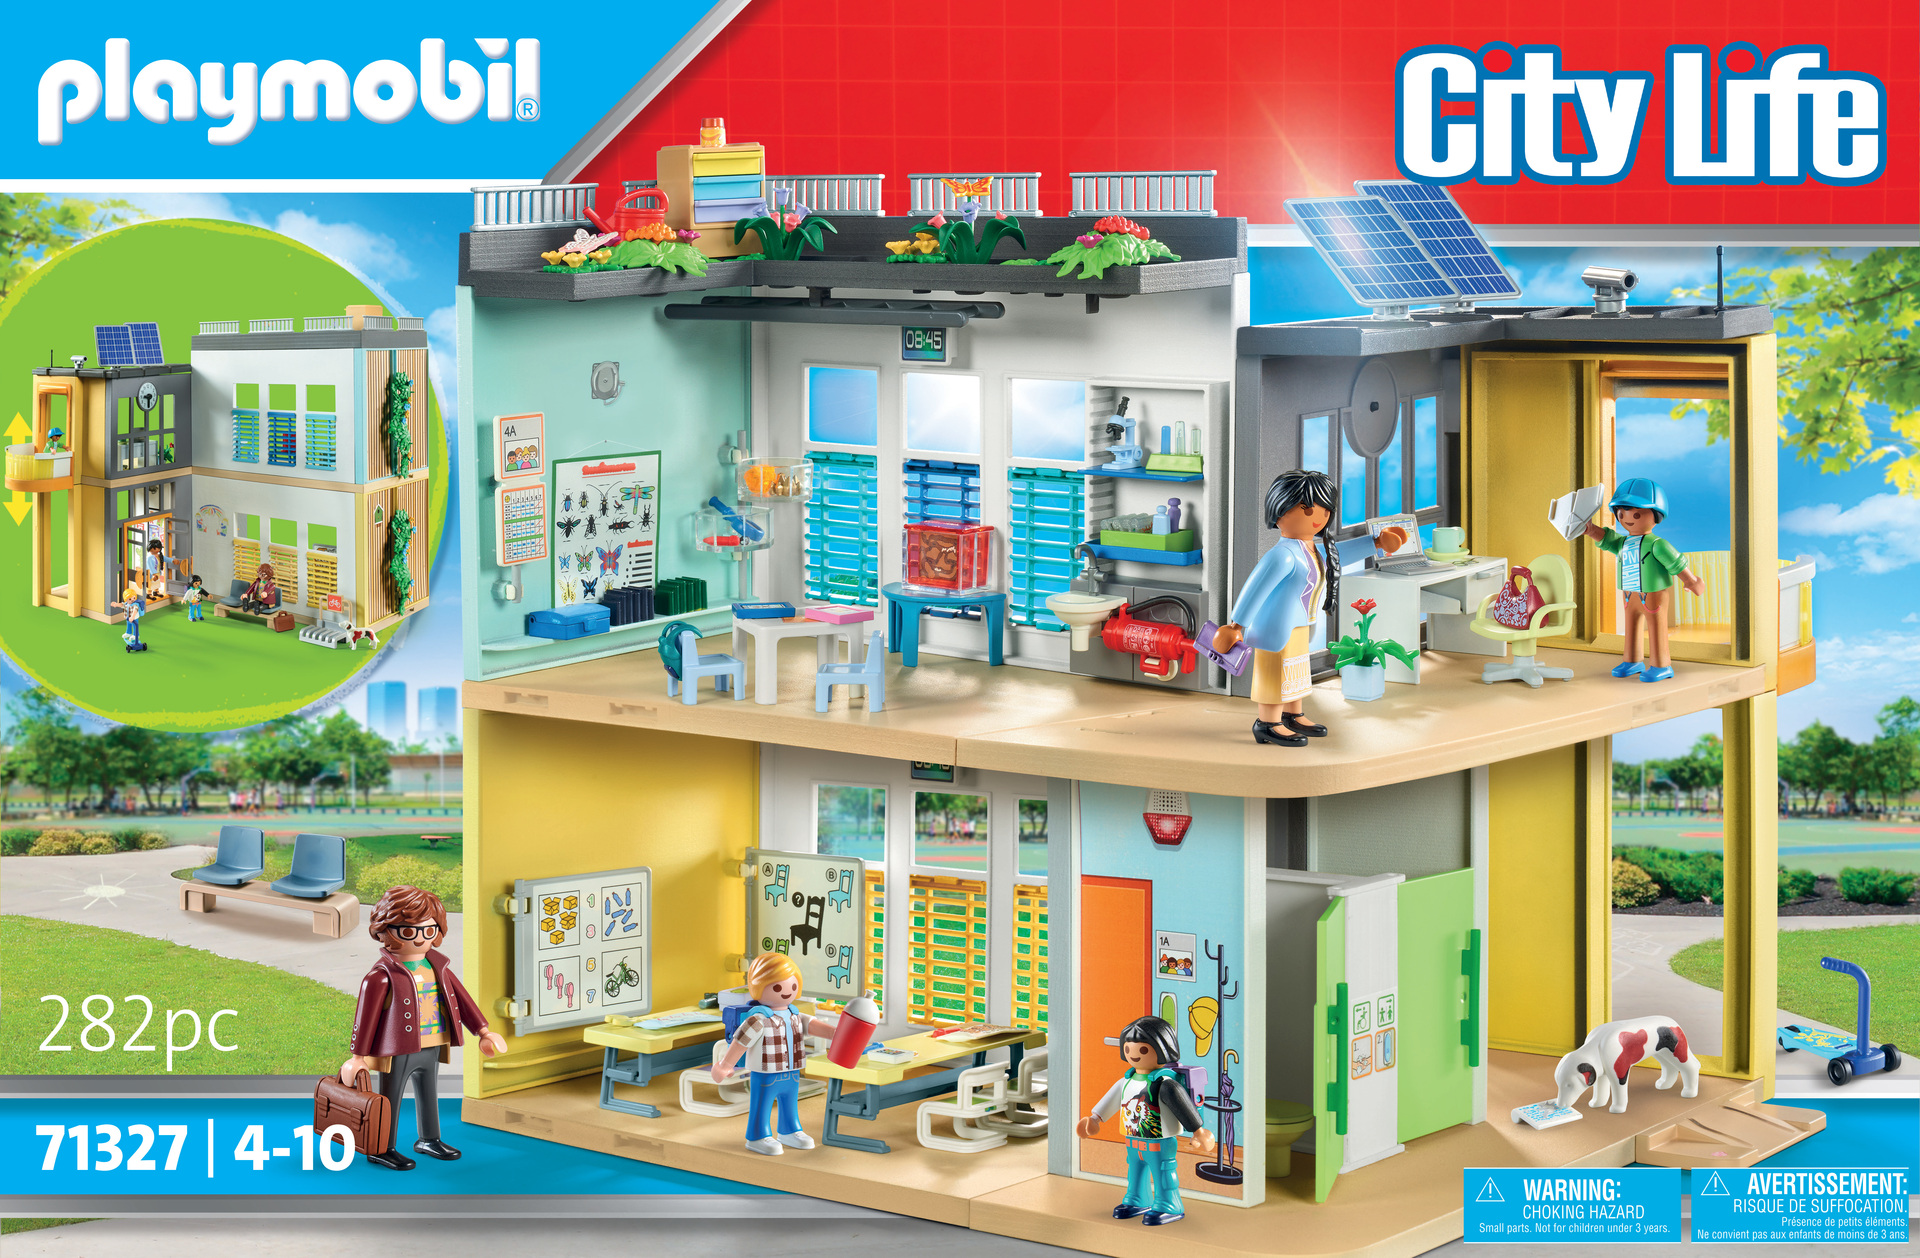 PLAYMOBIL 5941 Playmobil City Life Salle de classe transportable